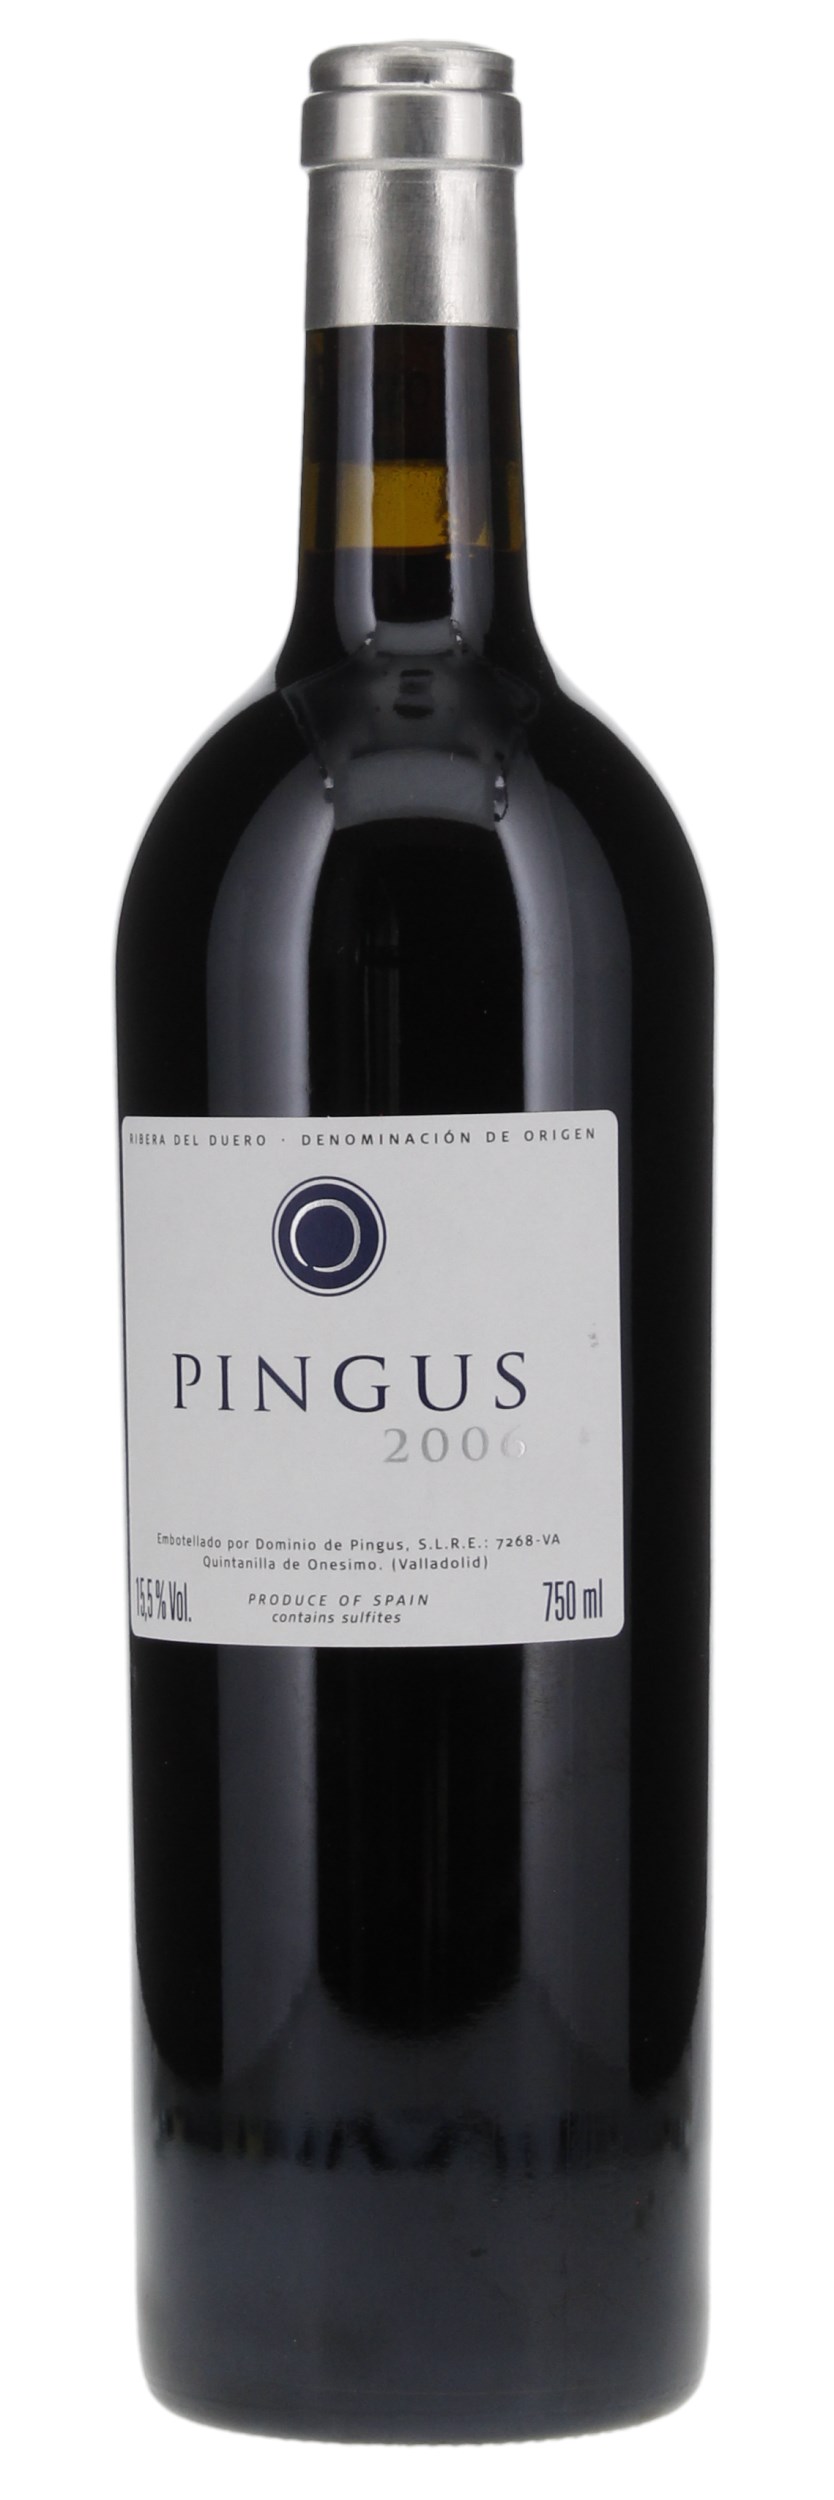 2006 Dominio de Pingus "Pingus", 750ml